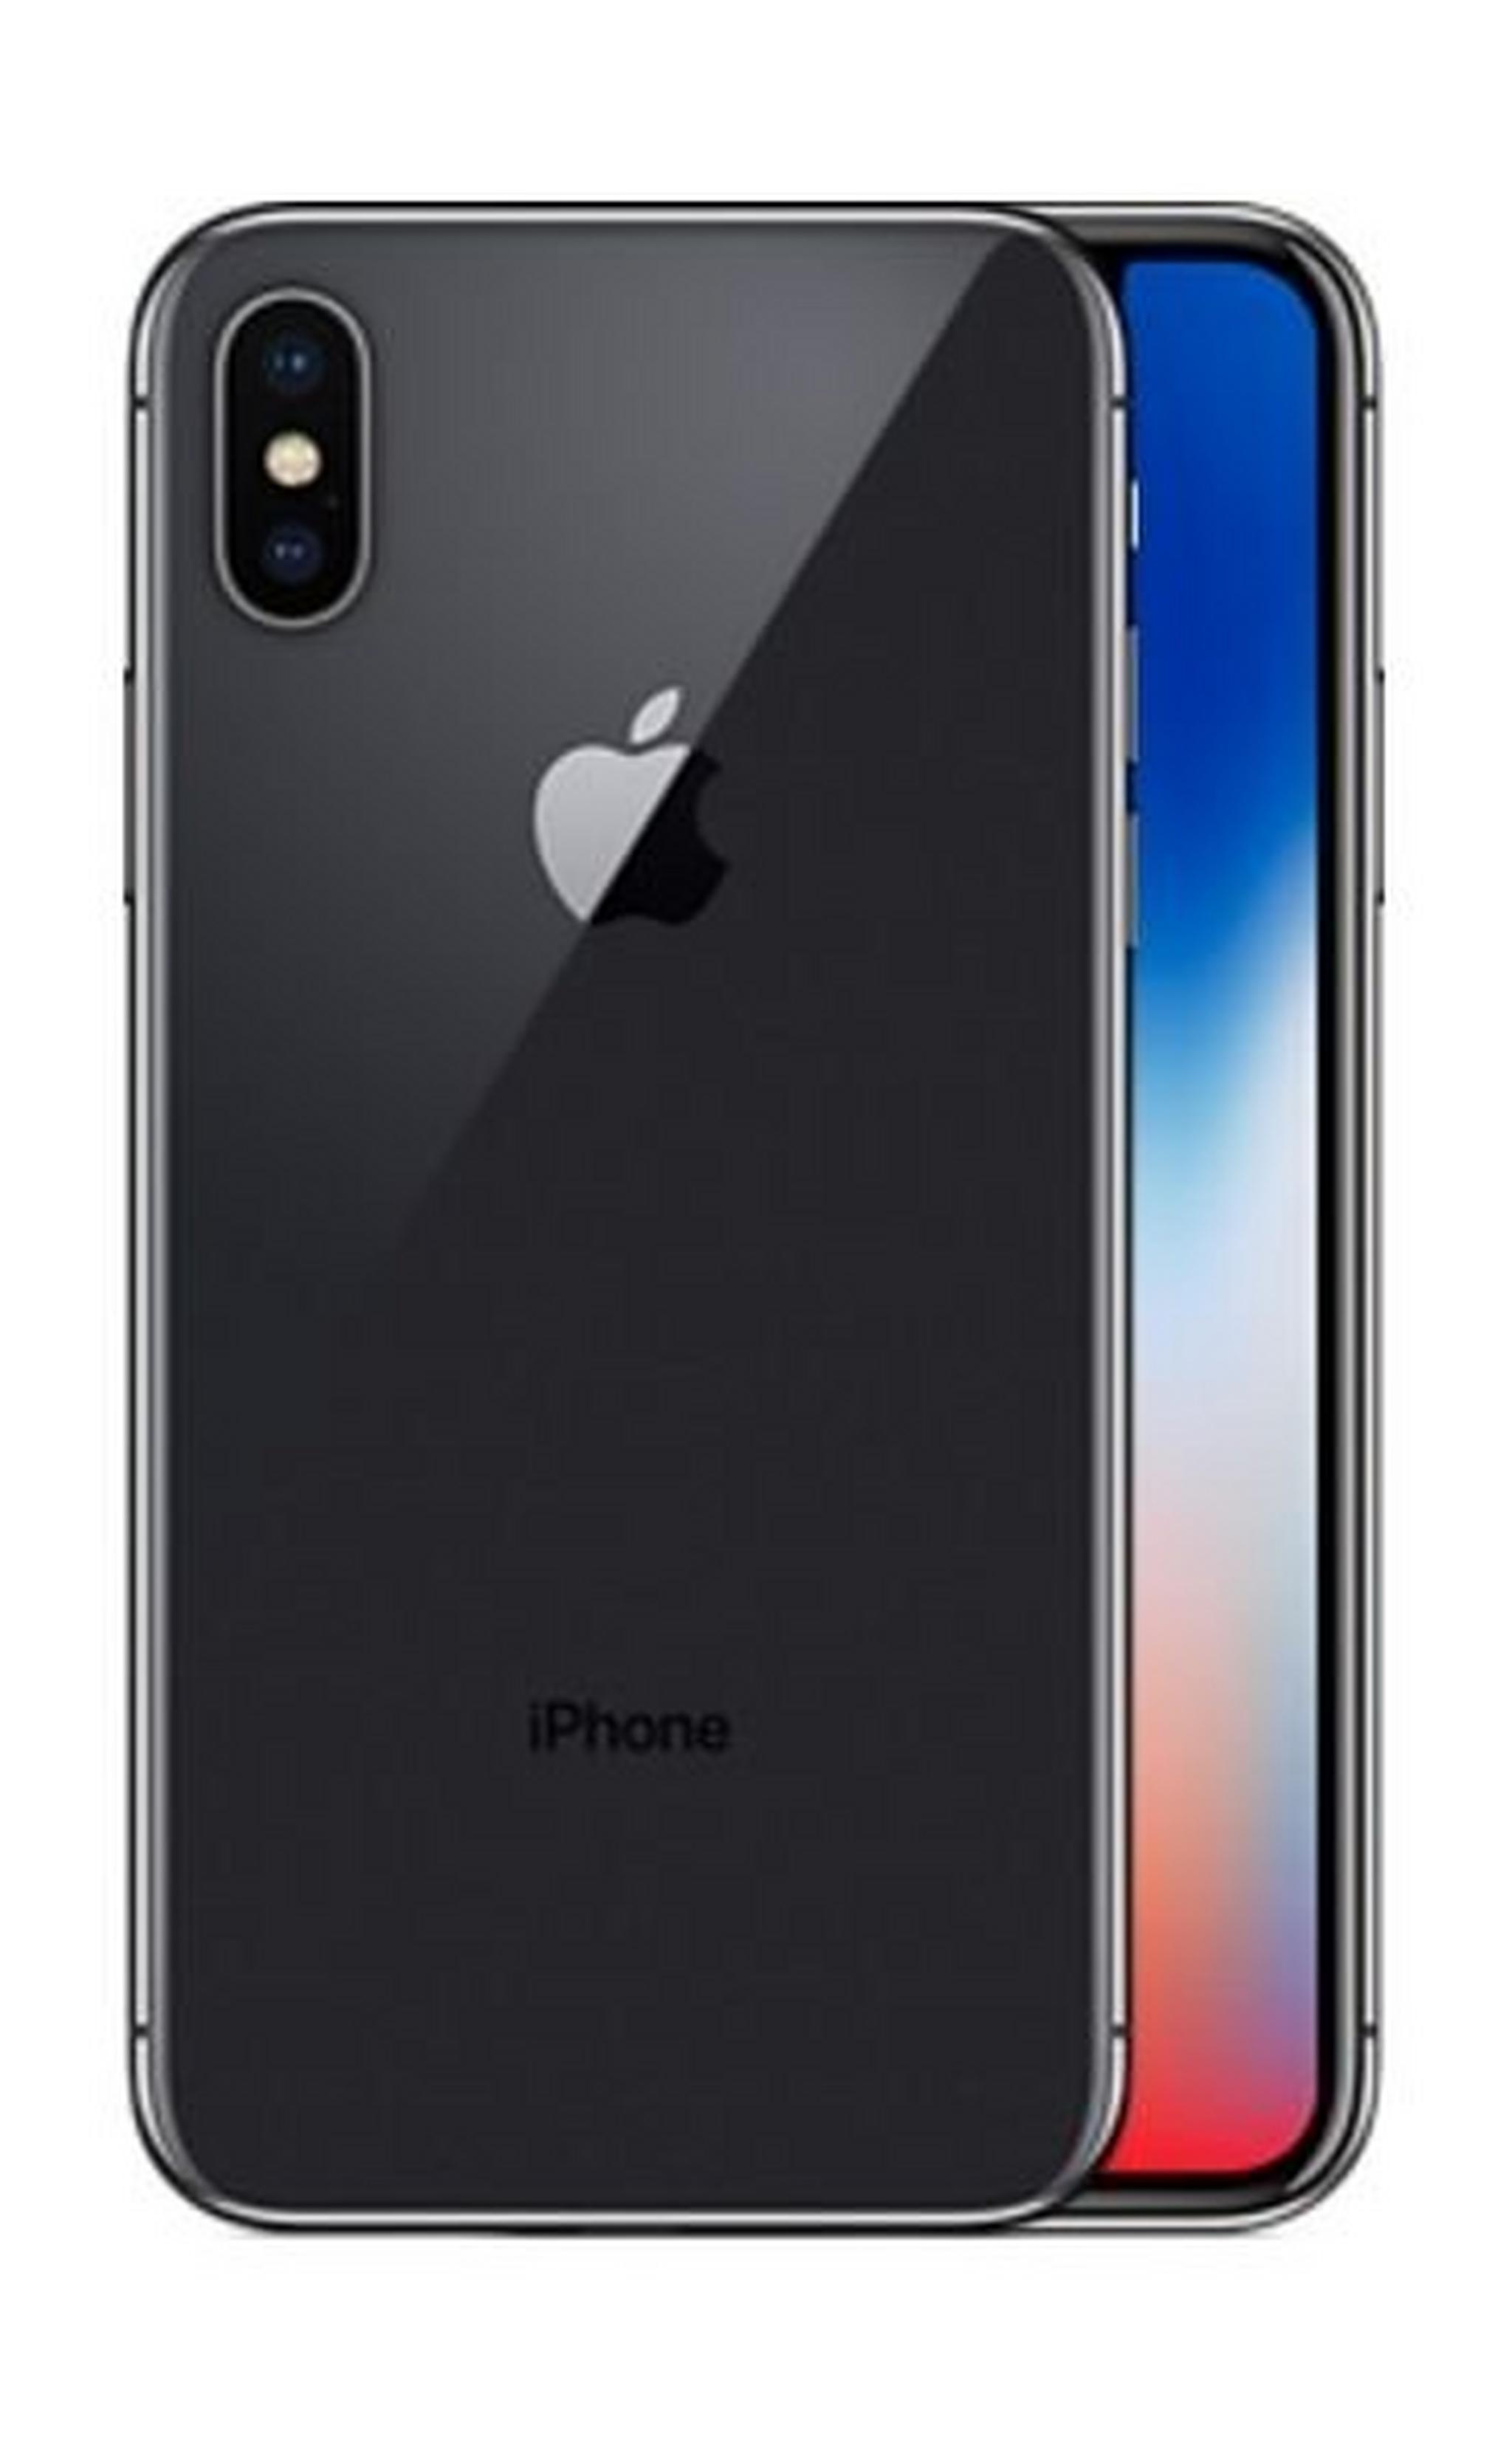 Apple iPhone X 64GB Phone - Space Grey